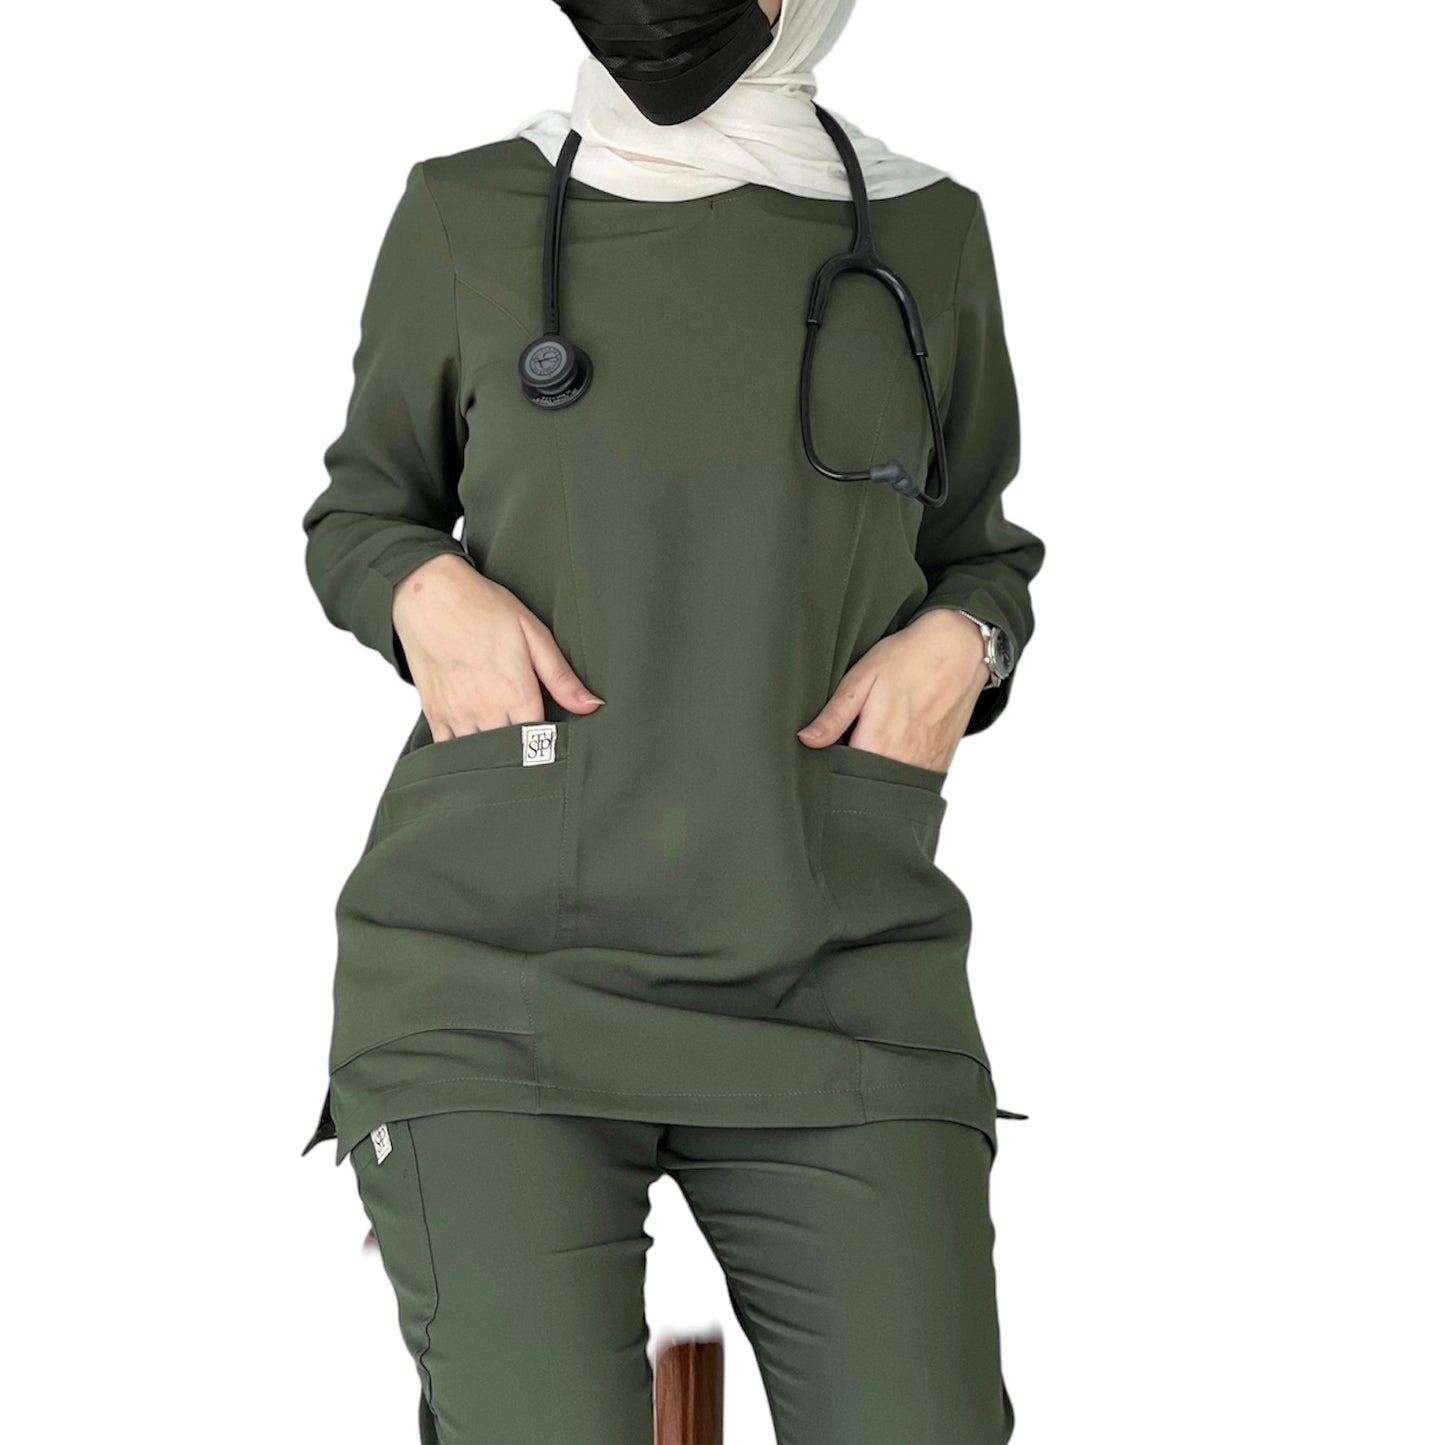 Army green long sleeves scrubs